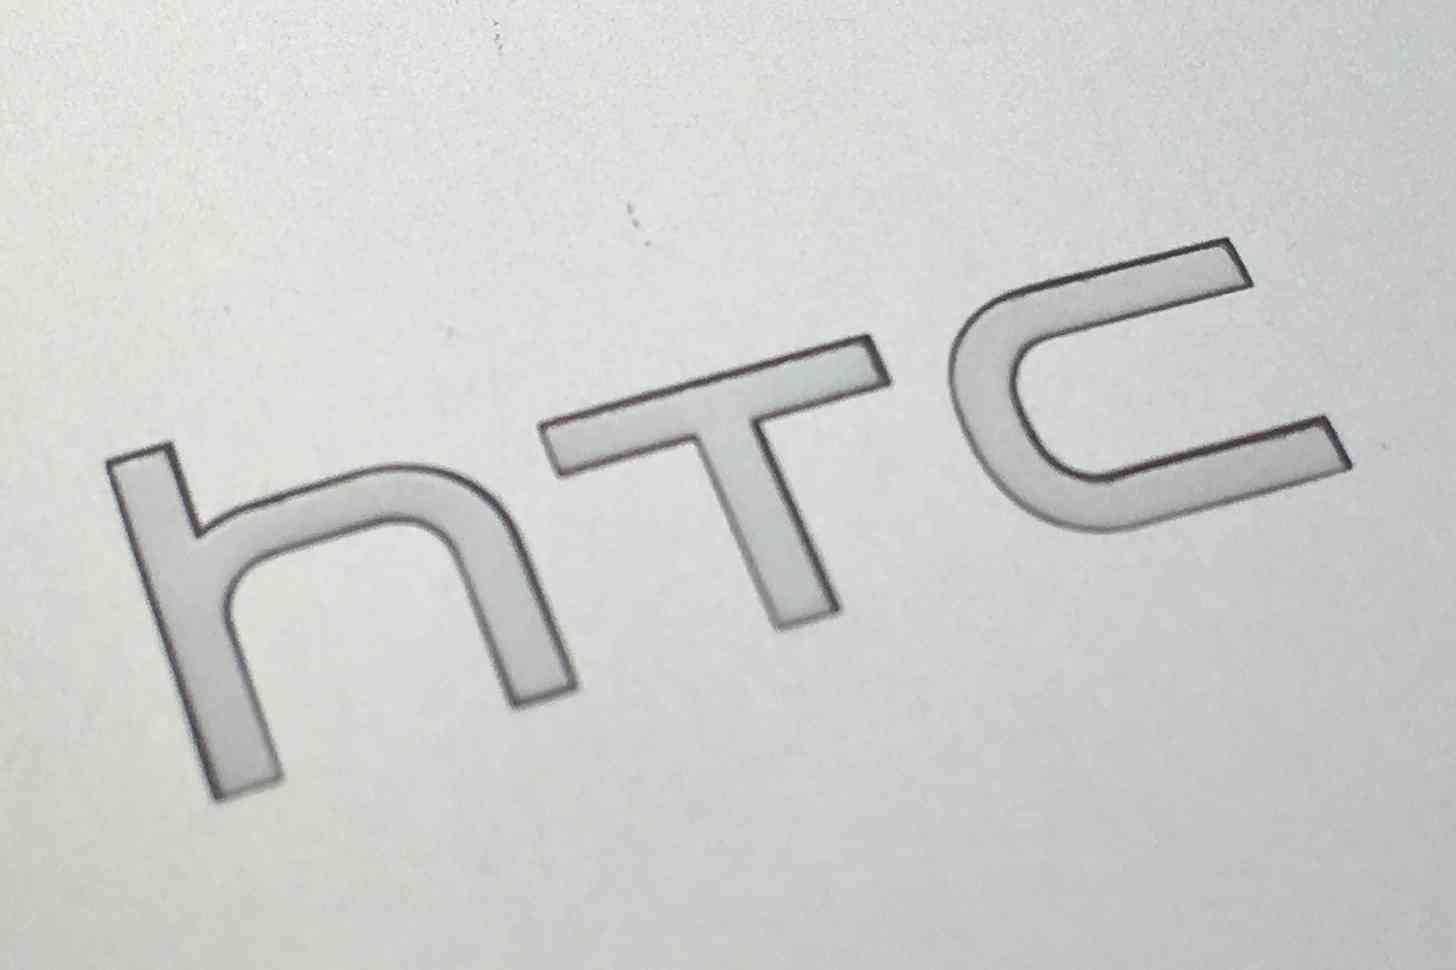 HTC logo One M7 large